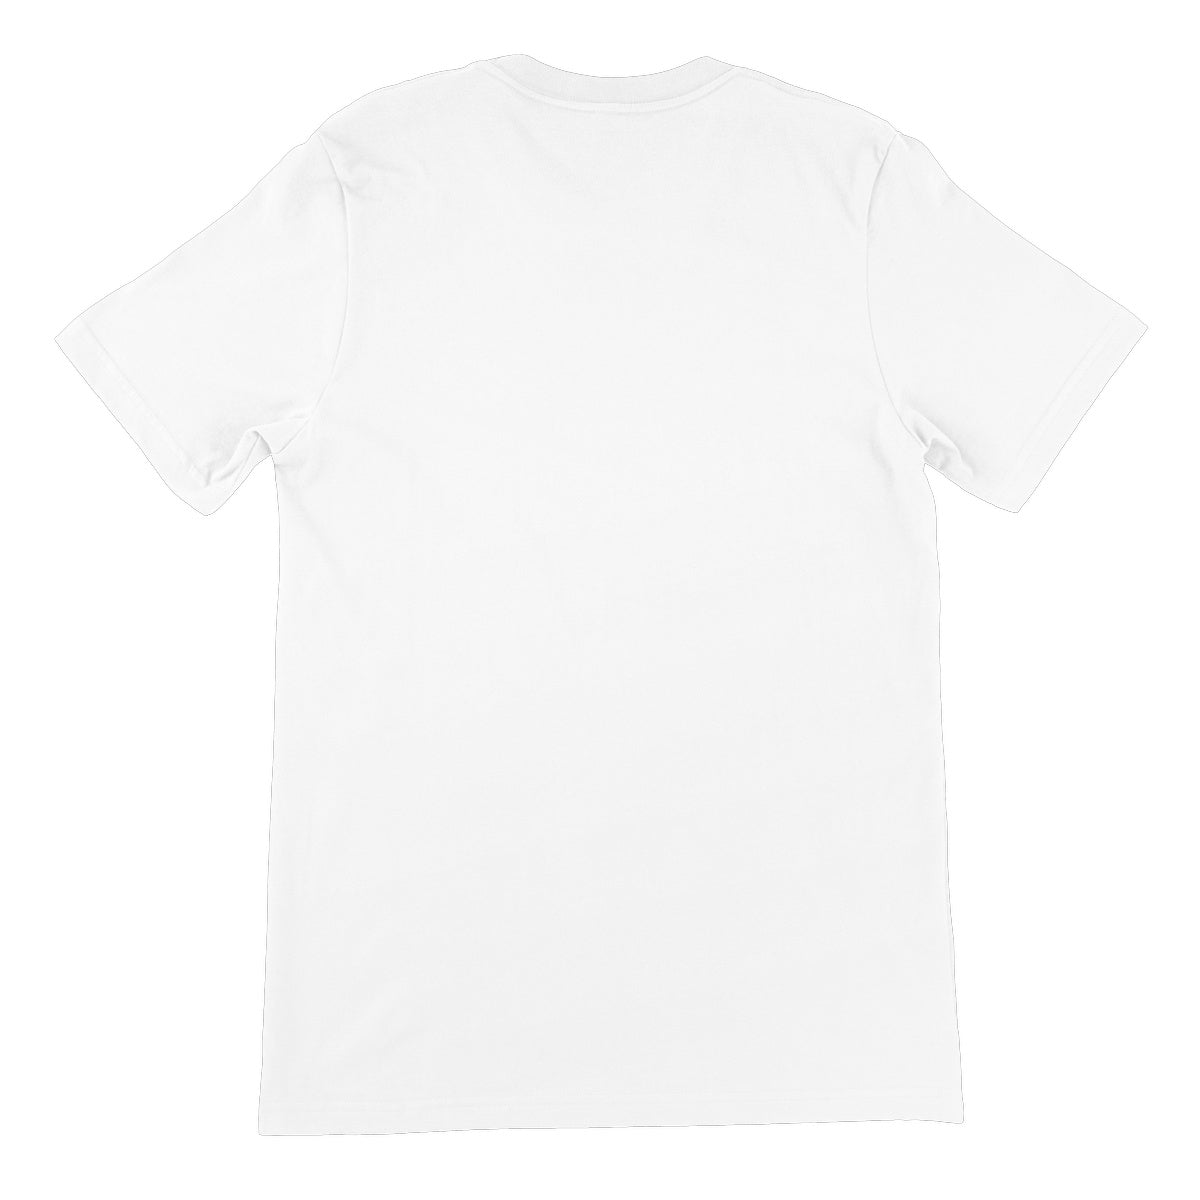 Pan Illustrated Tee Unisex Short Sleeve T-Shirt